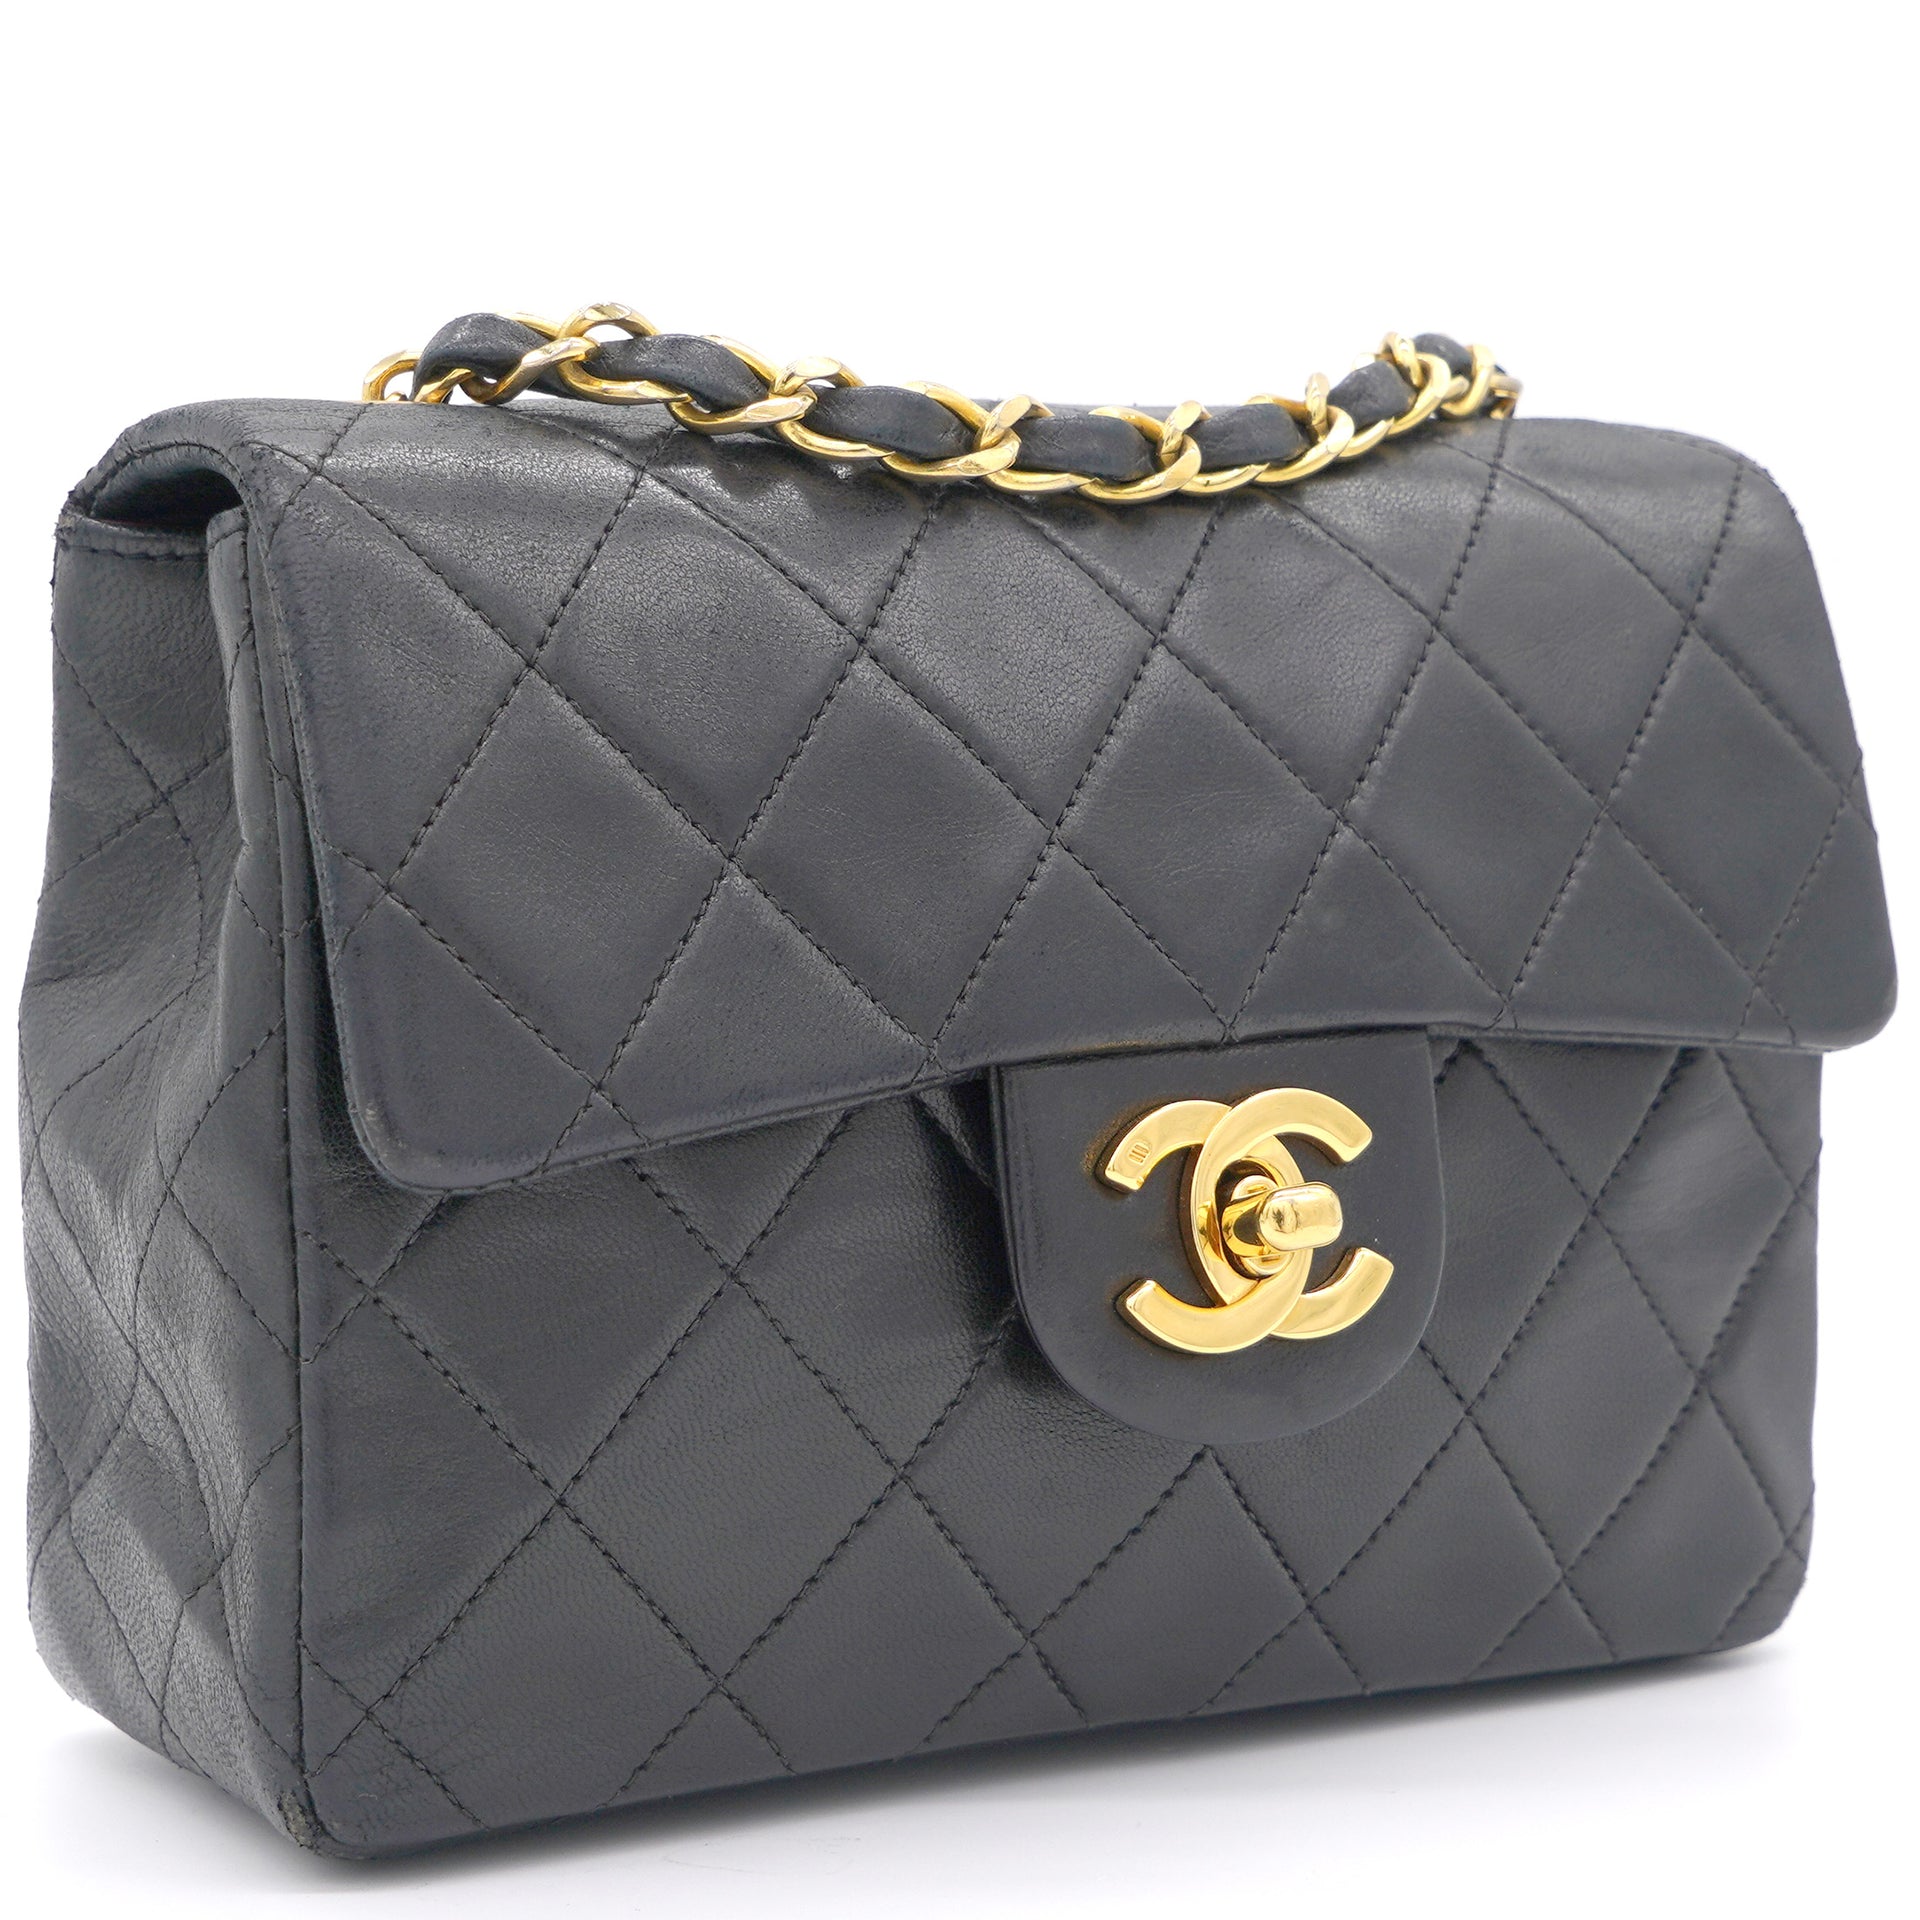 Beige Chanel Bags, Beige Chanel Purse for Sale